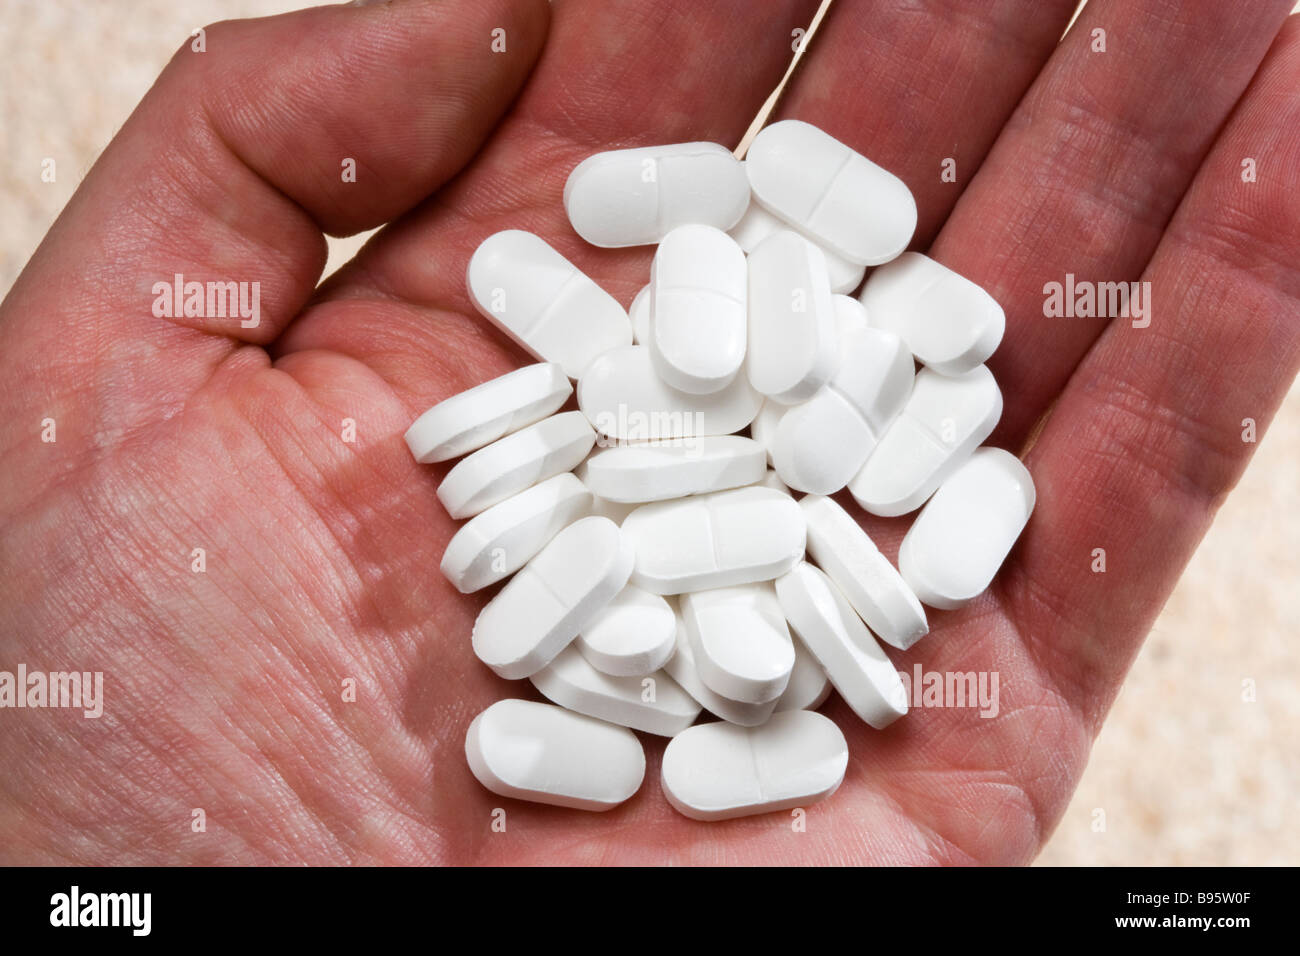 Overdose - hand full of painkillers. Stock Photo